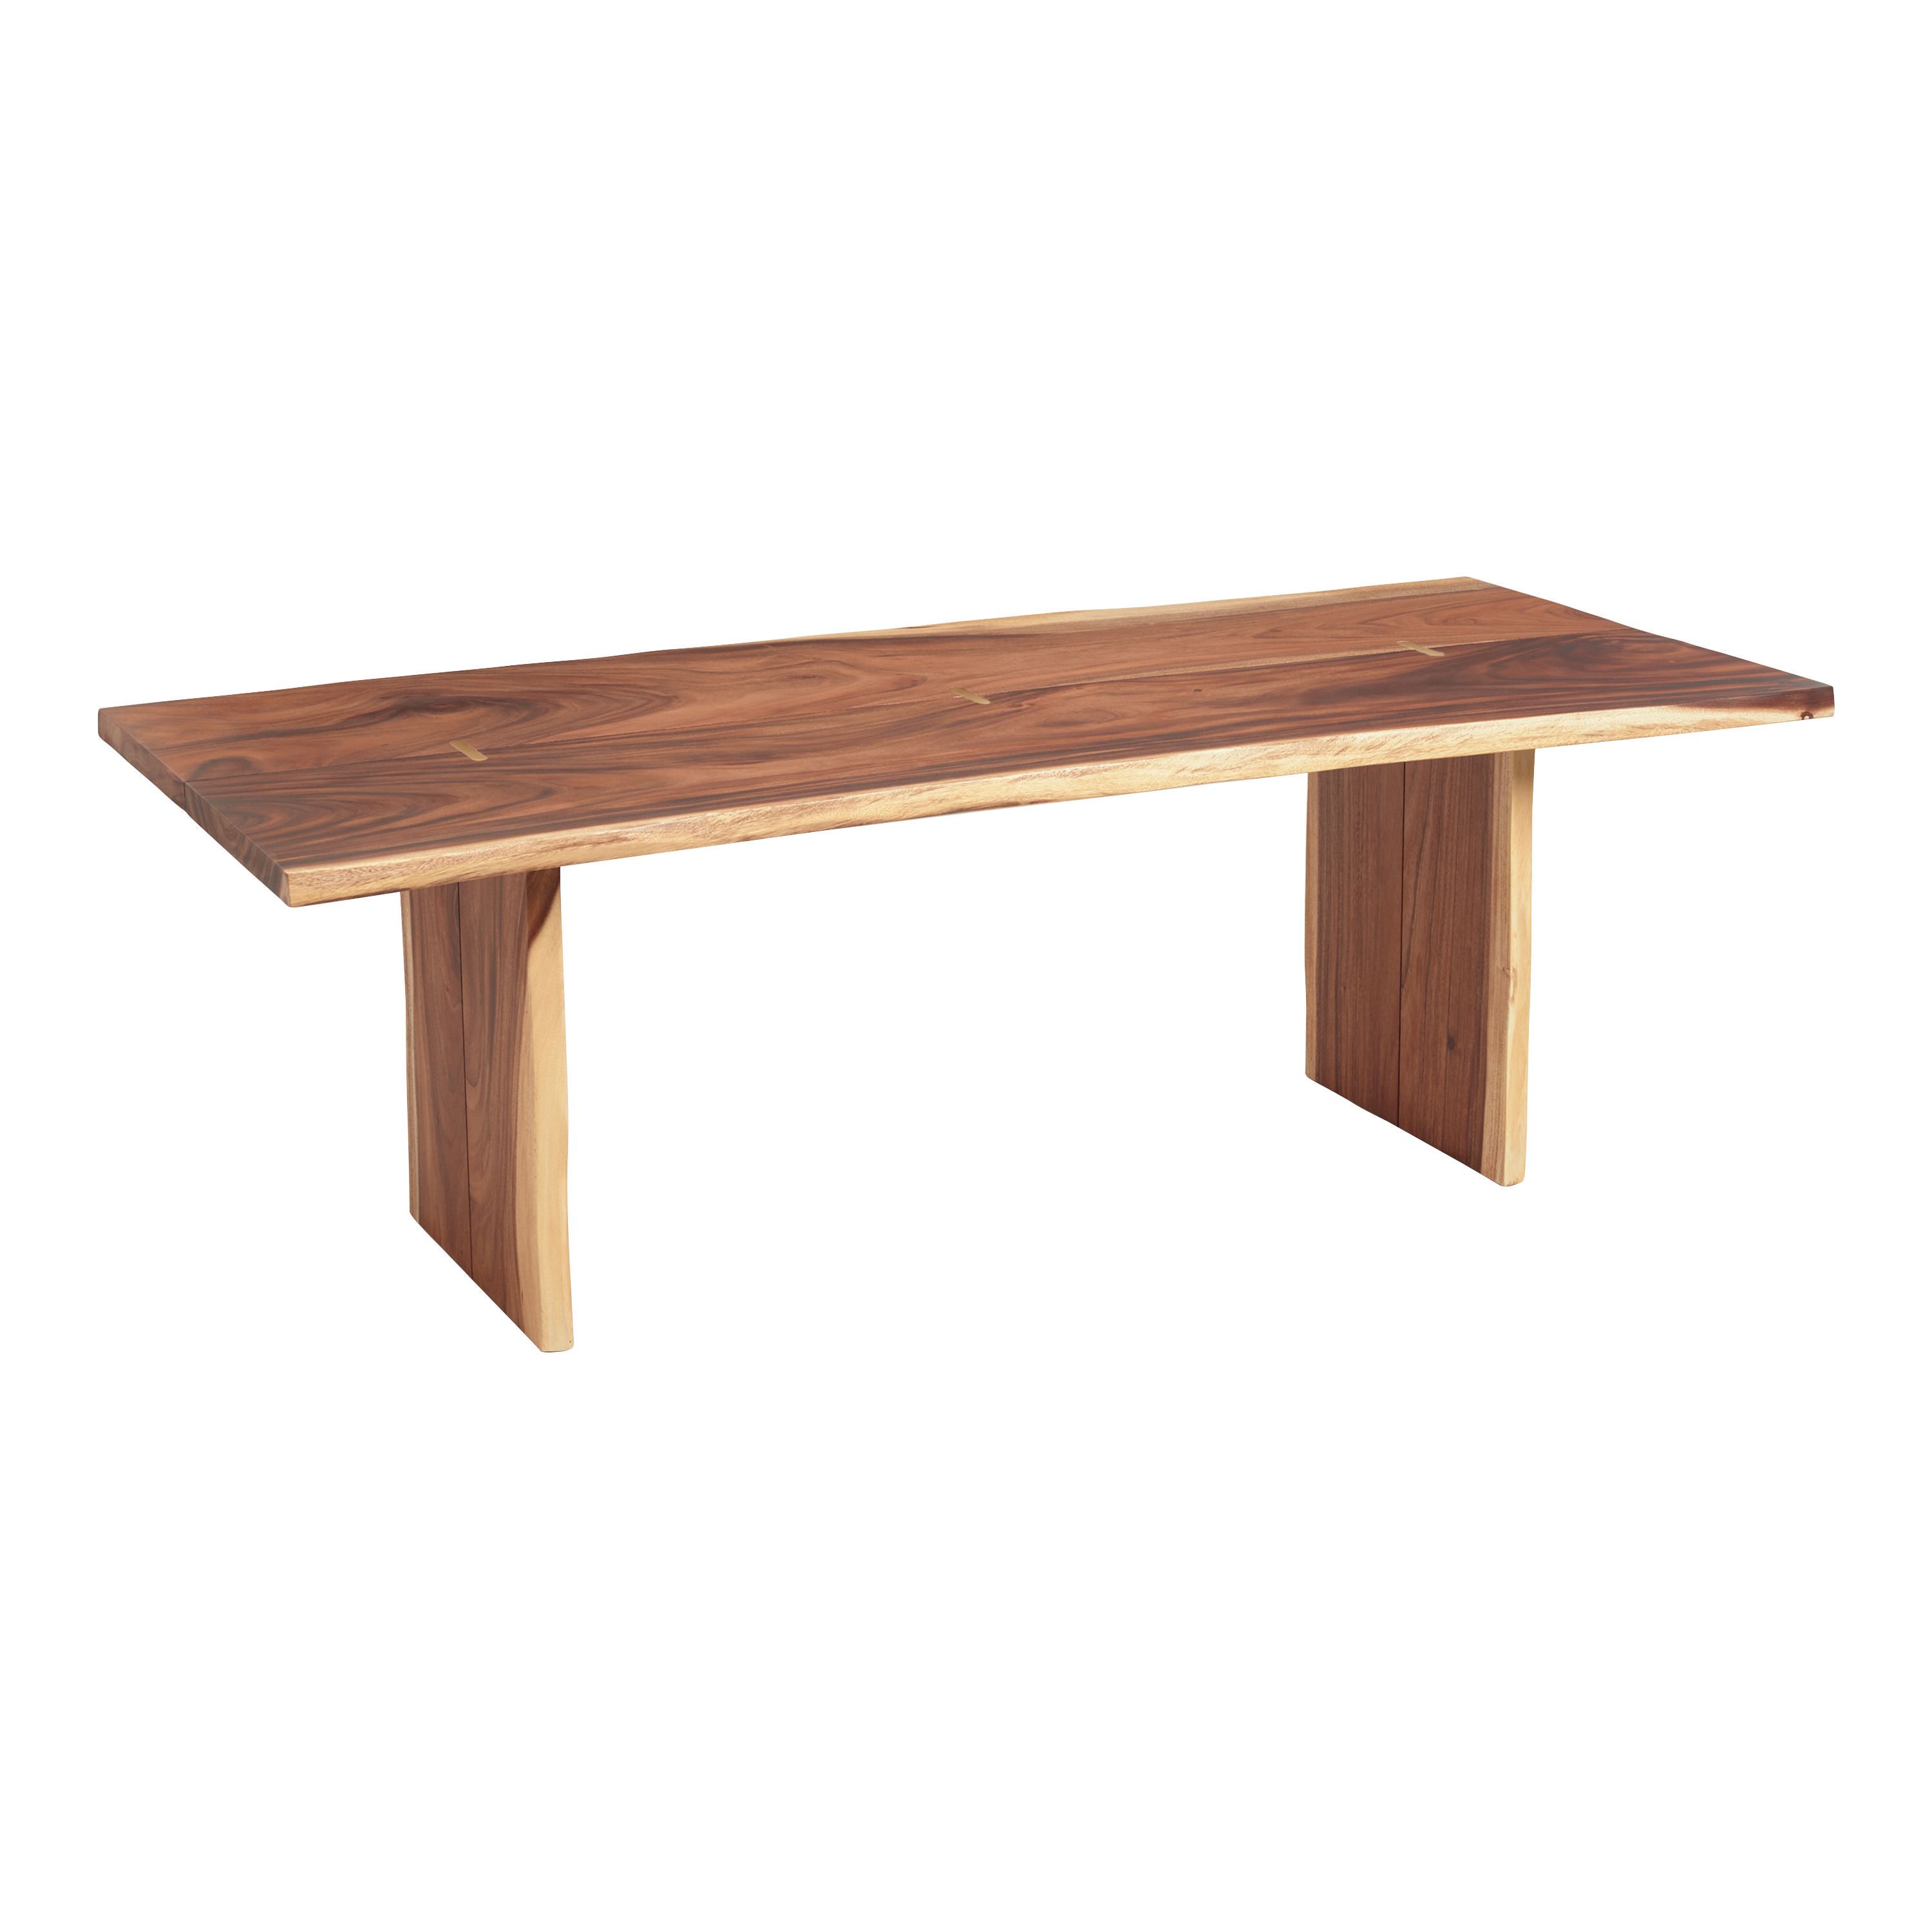 Sansur Rustic Pecan Live Edge Wood Dining Table | World Market